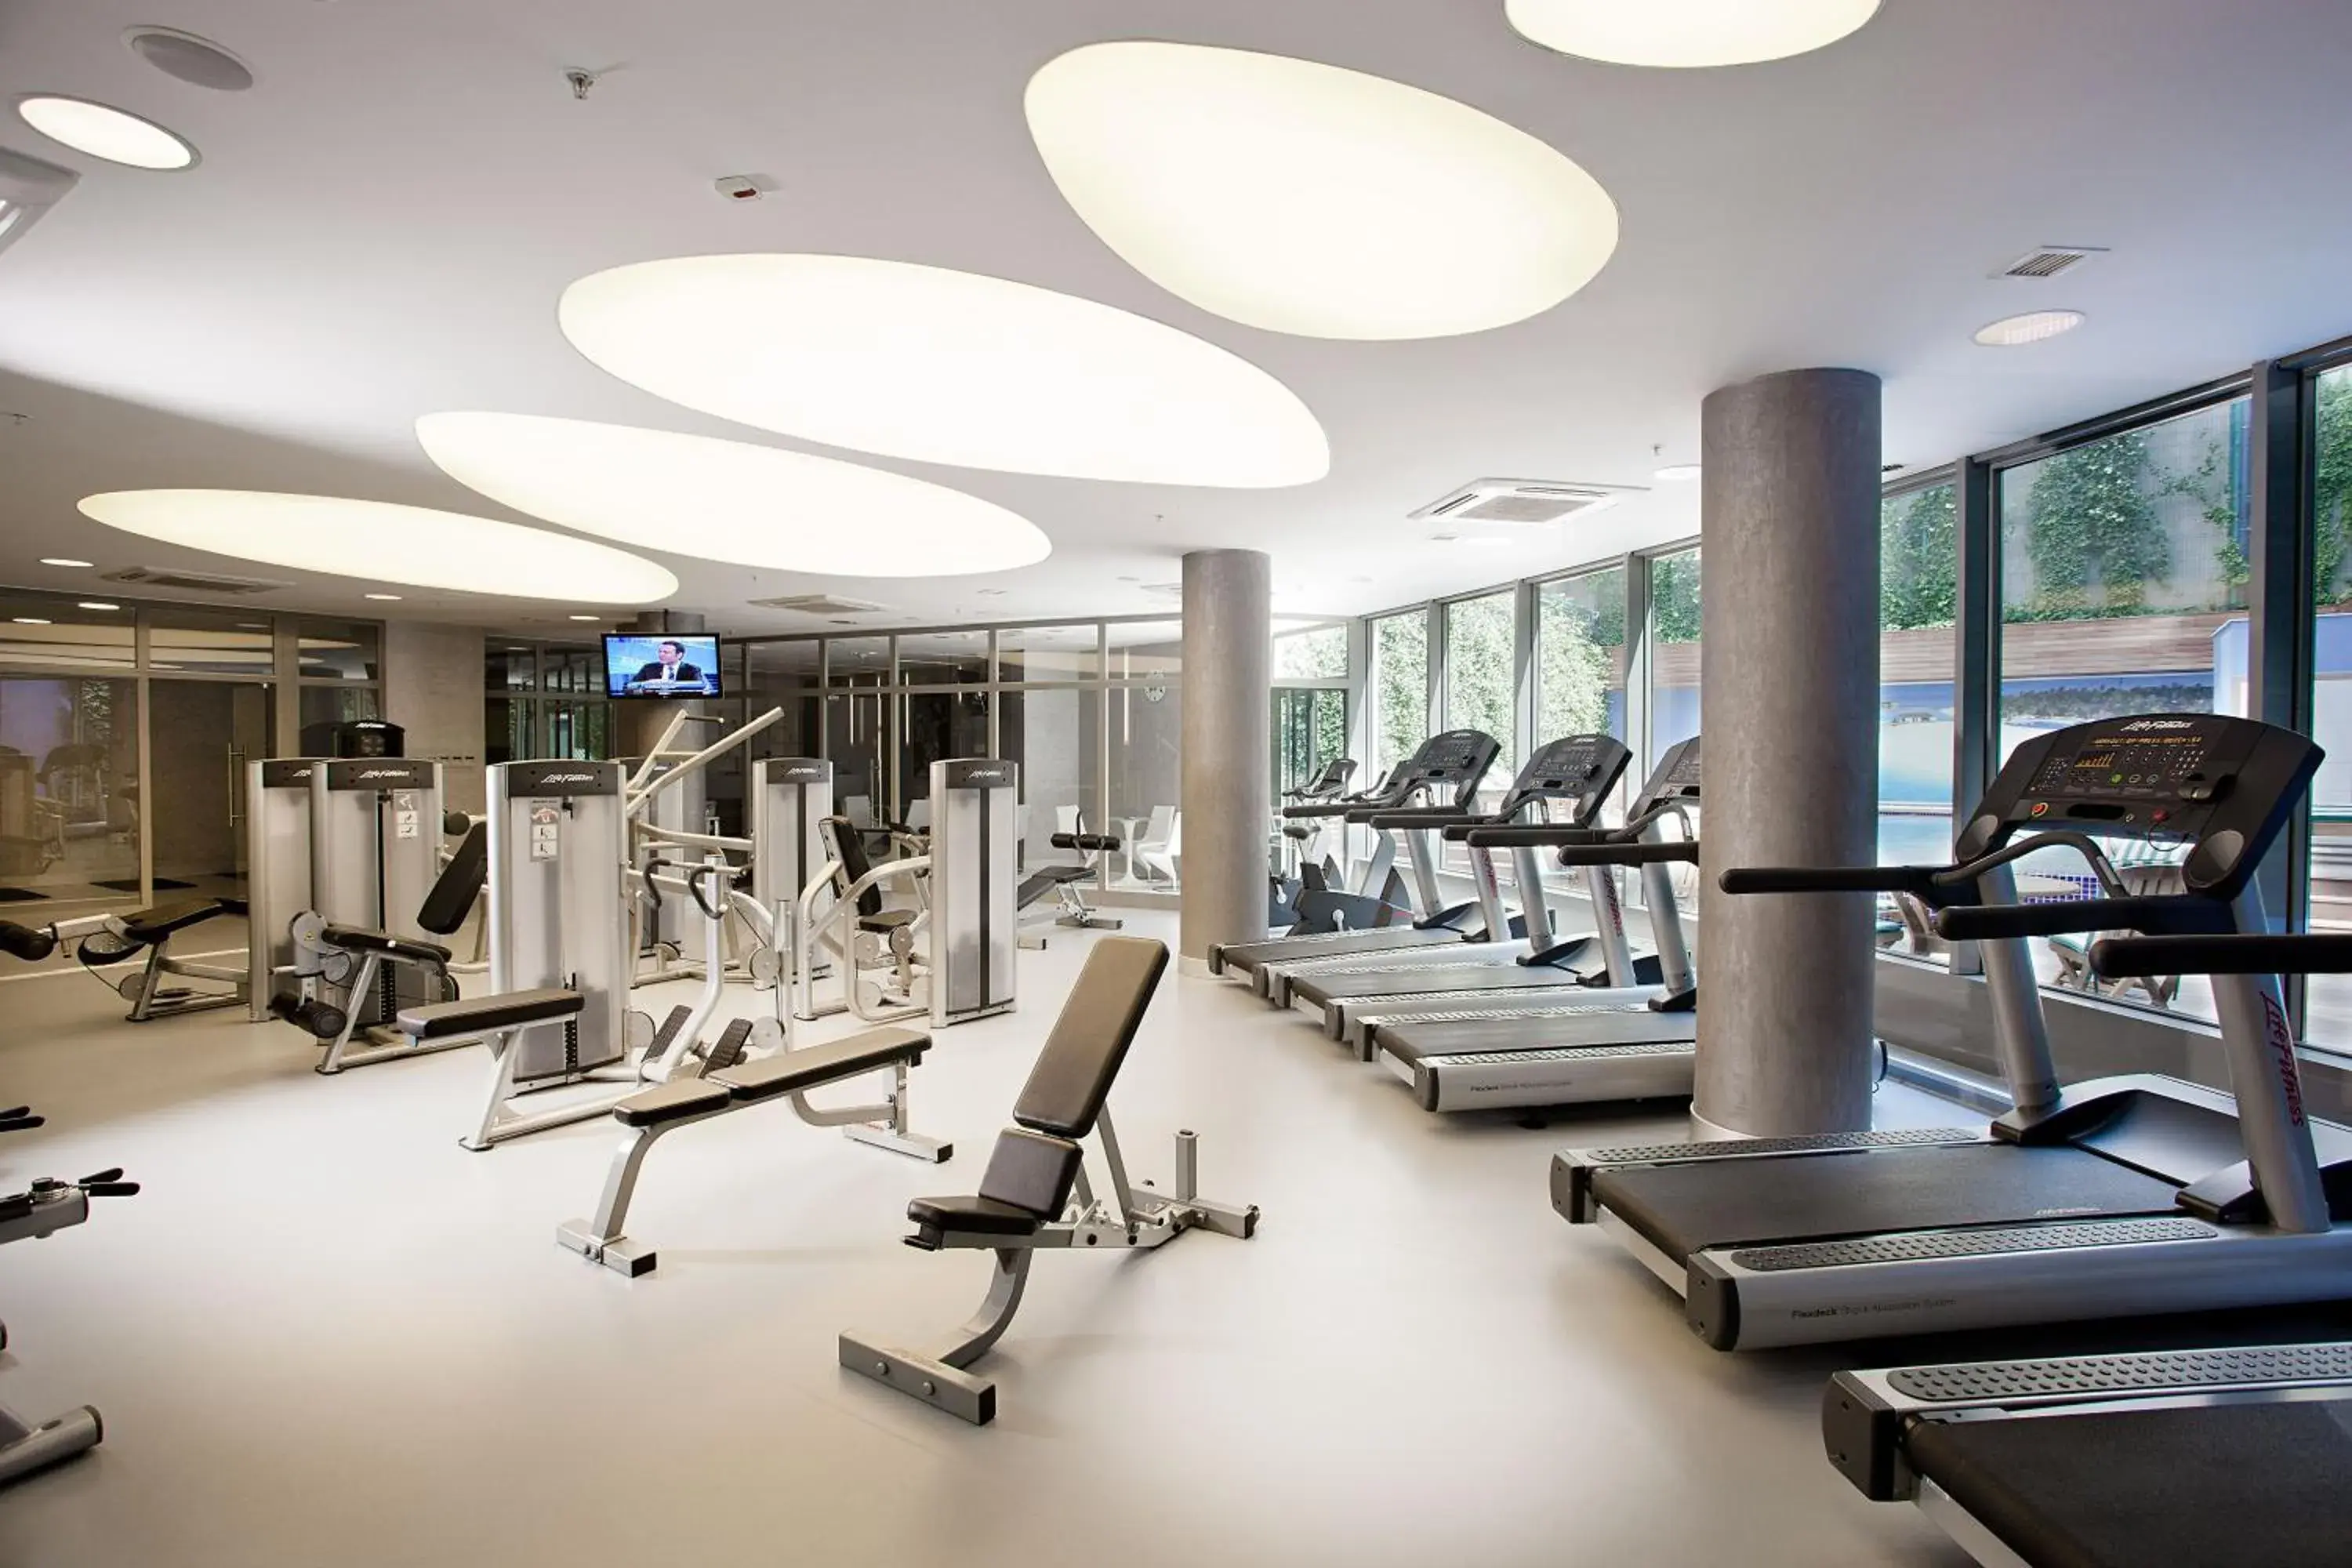 Fitness centre/facilities, Fitness Center/Facilities in Opera Hotel Bosphorus